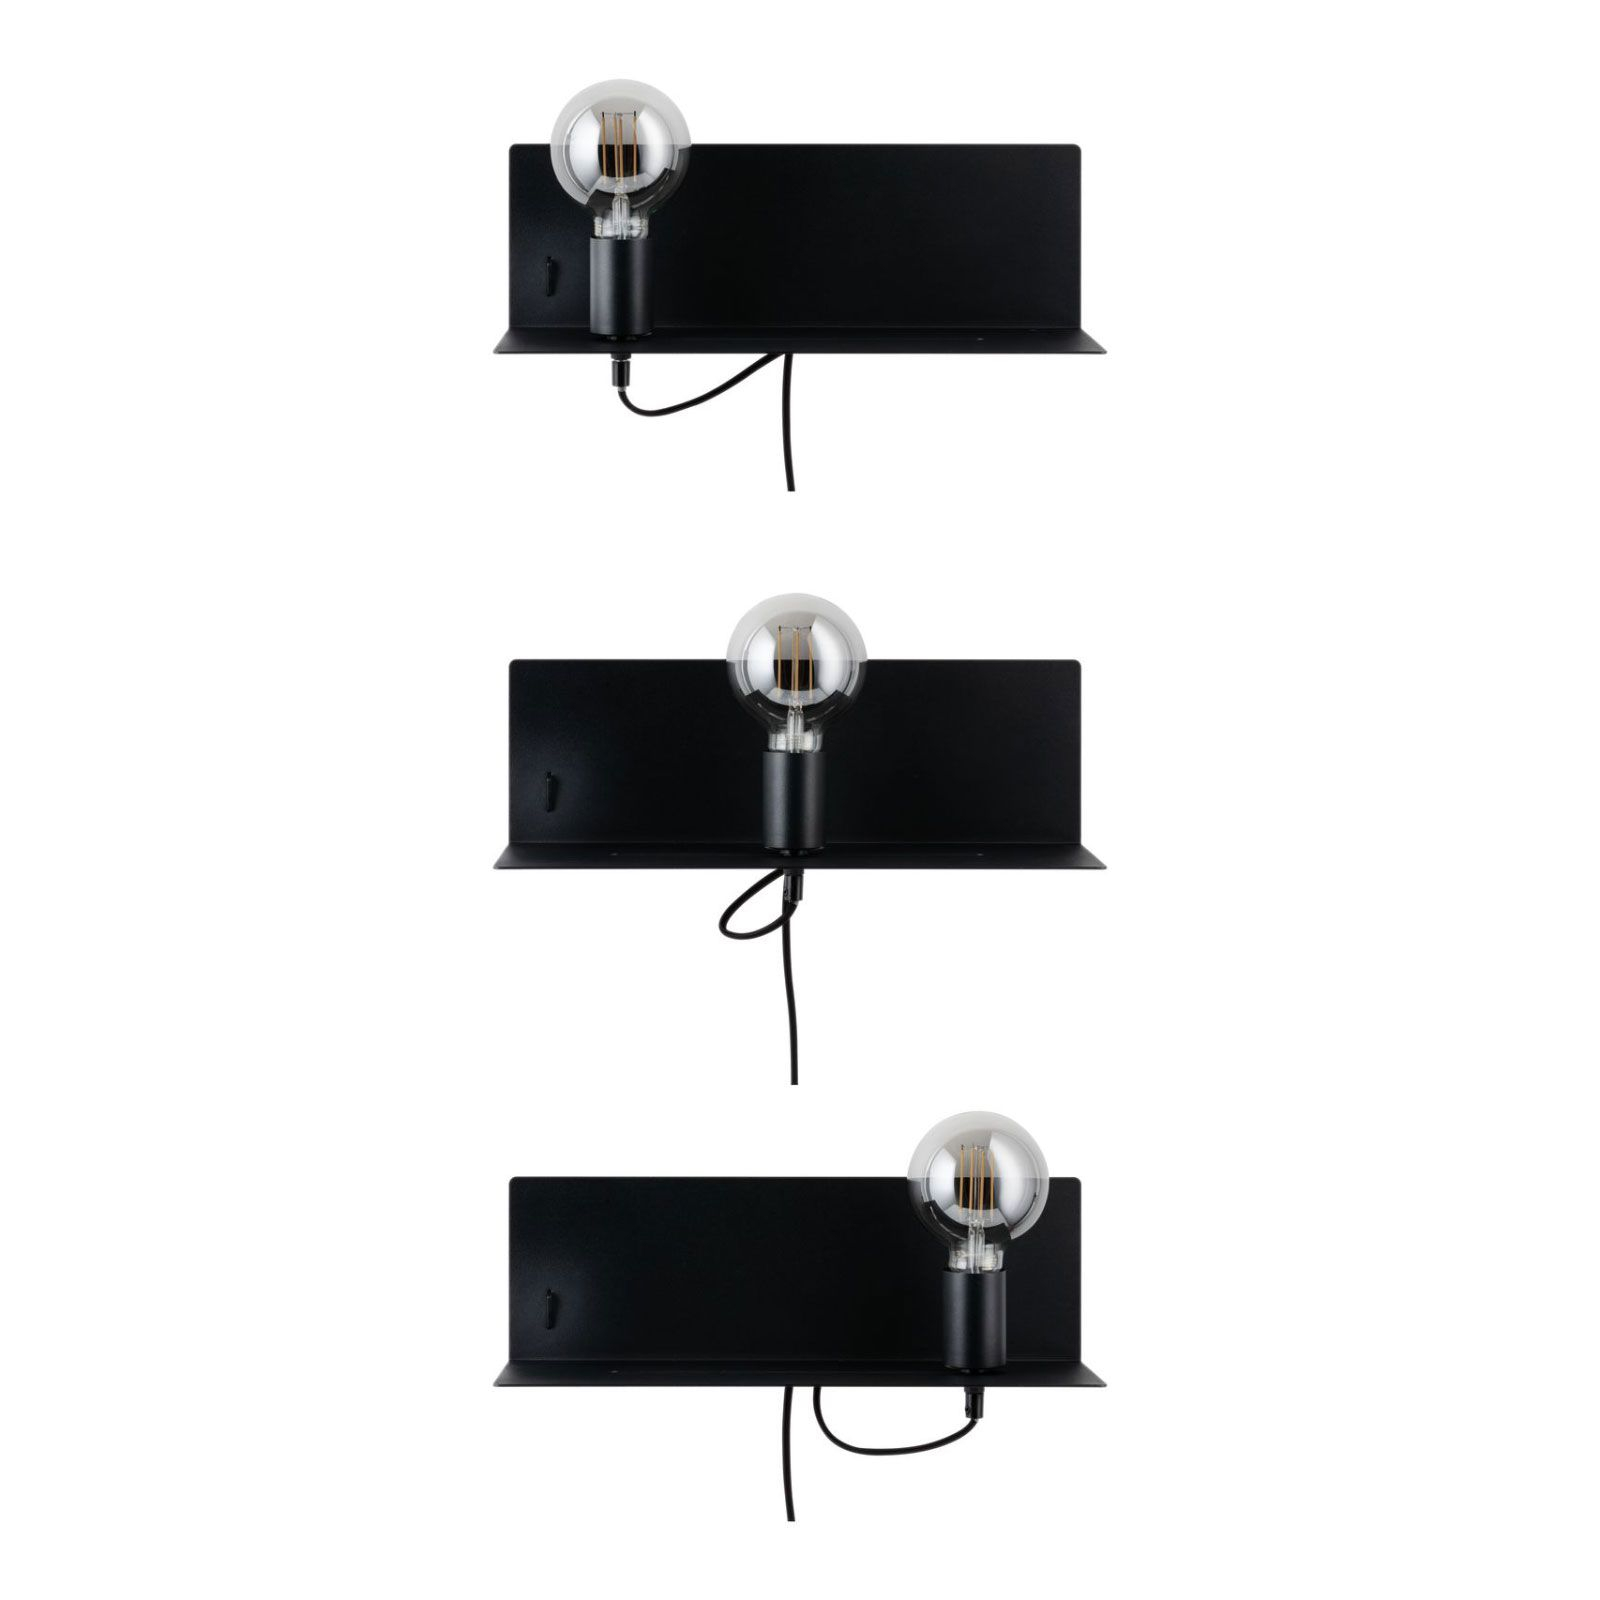 Paulmann Devara wall light with a shelf, black